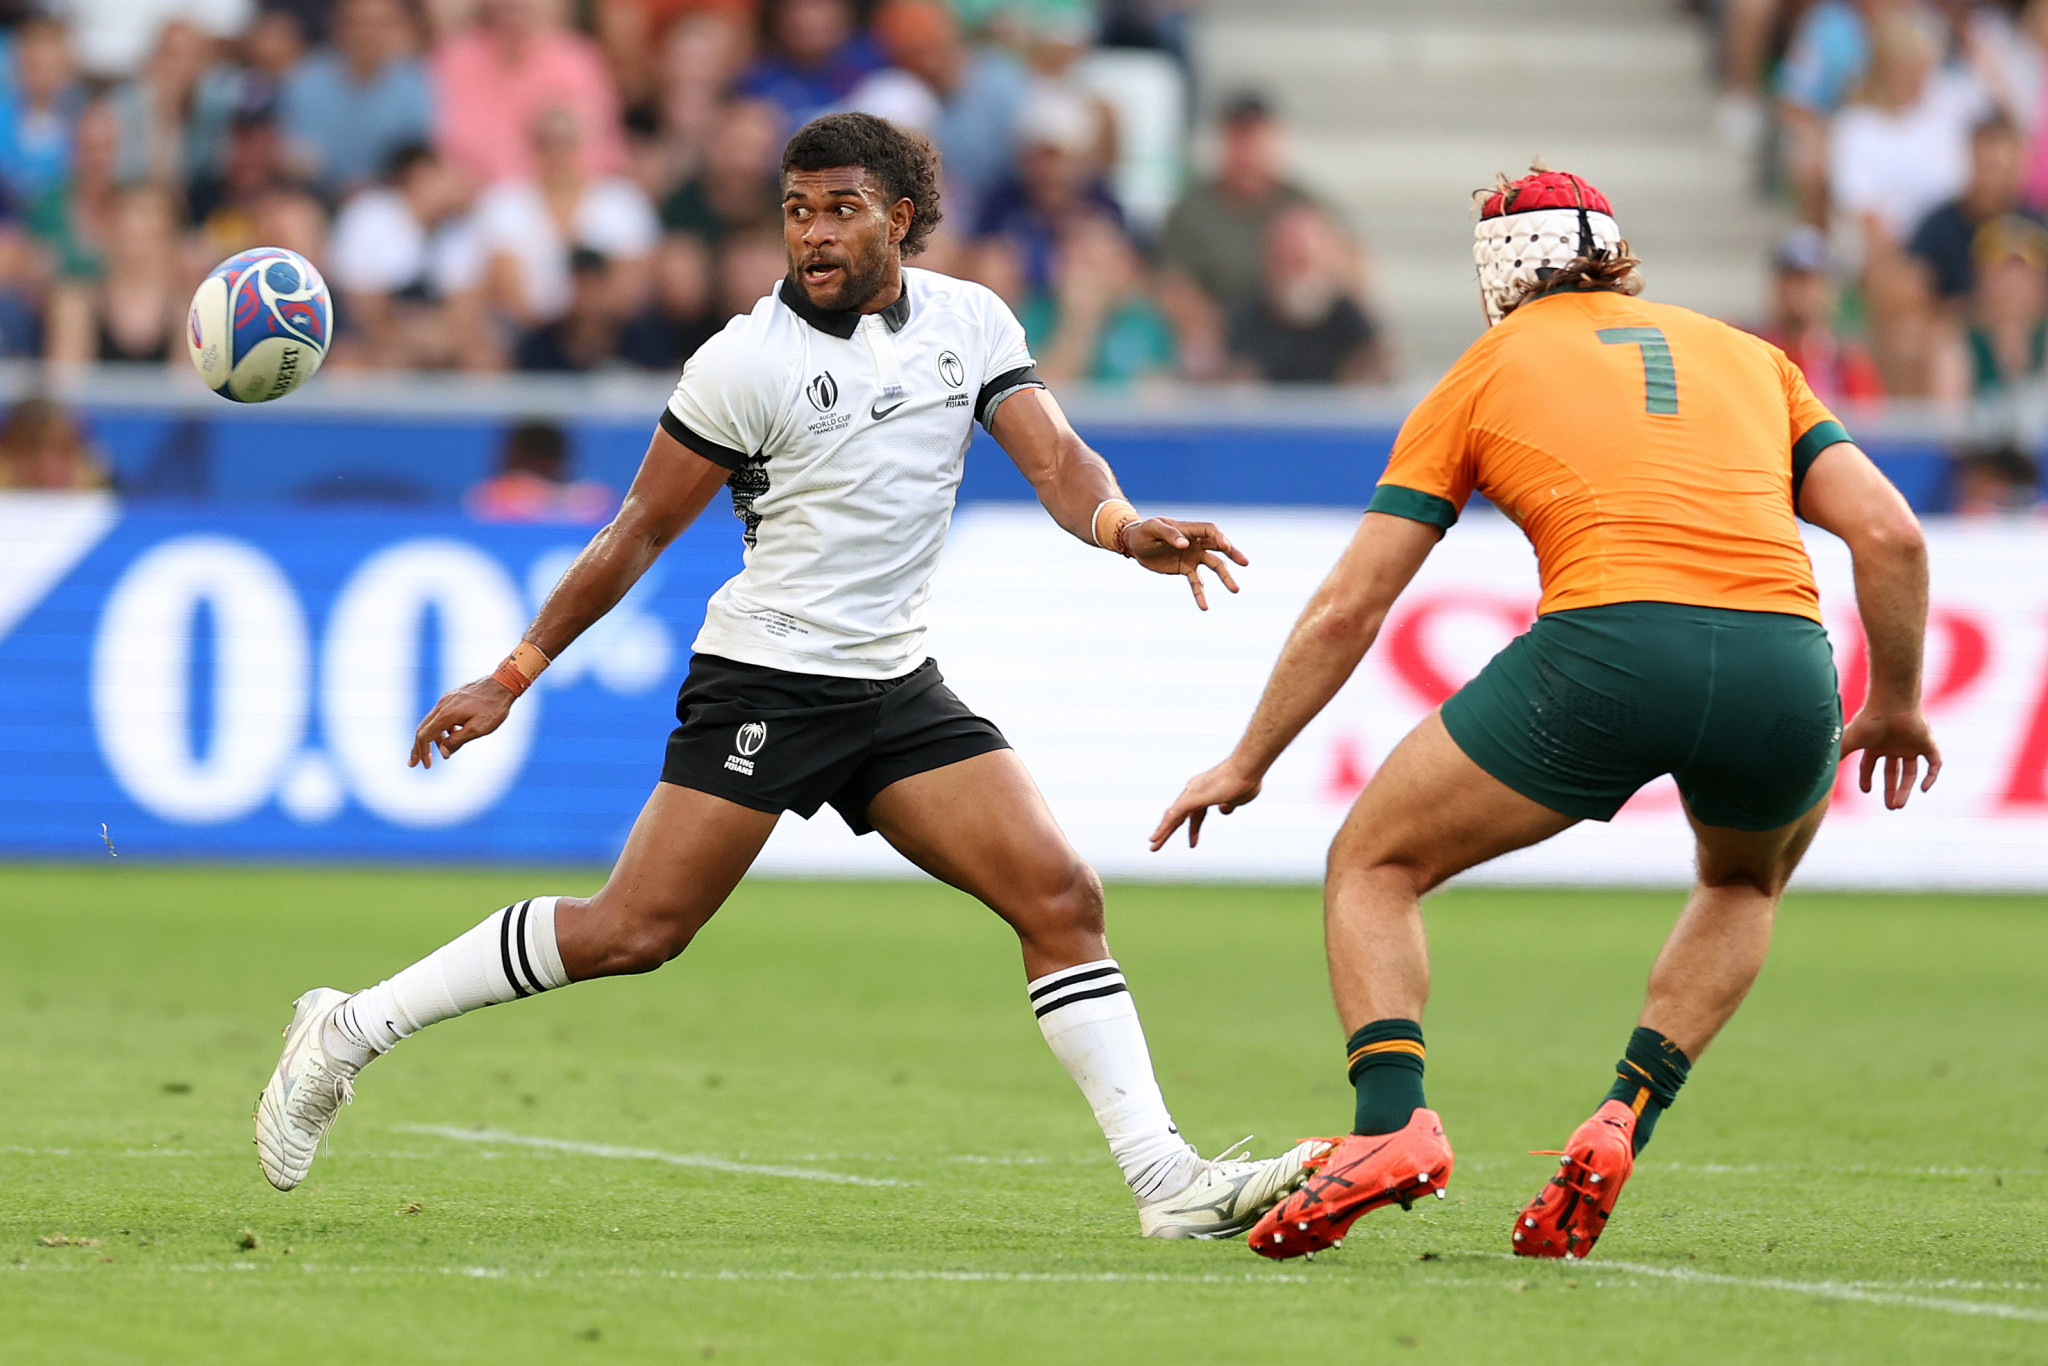 Simione Kuruvoli starred as Fiji secured a historic win over Australia ©Getty Images